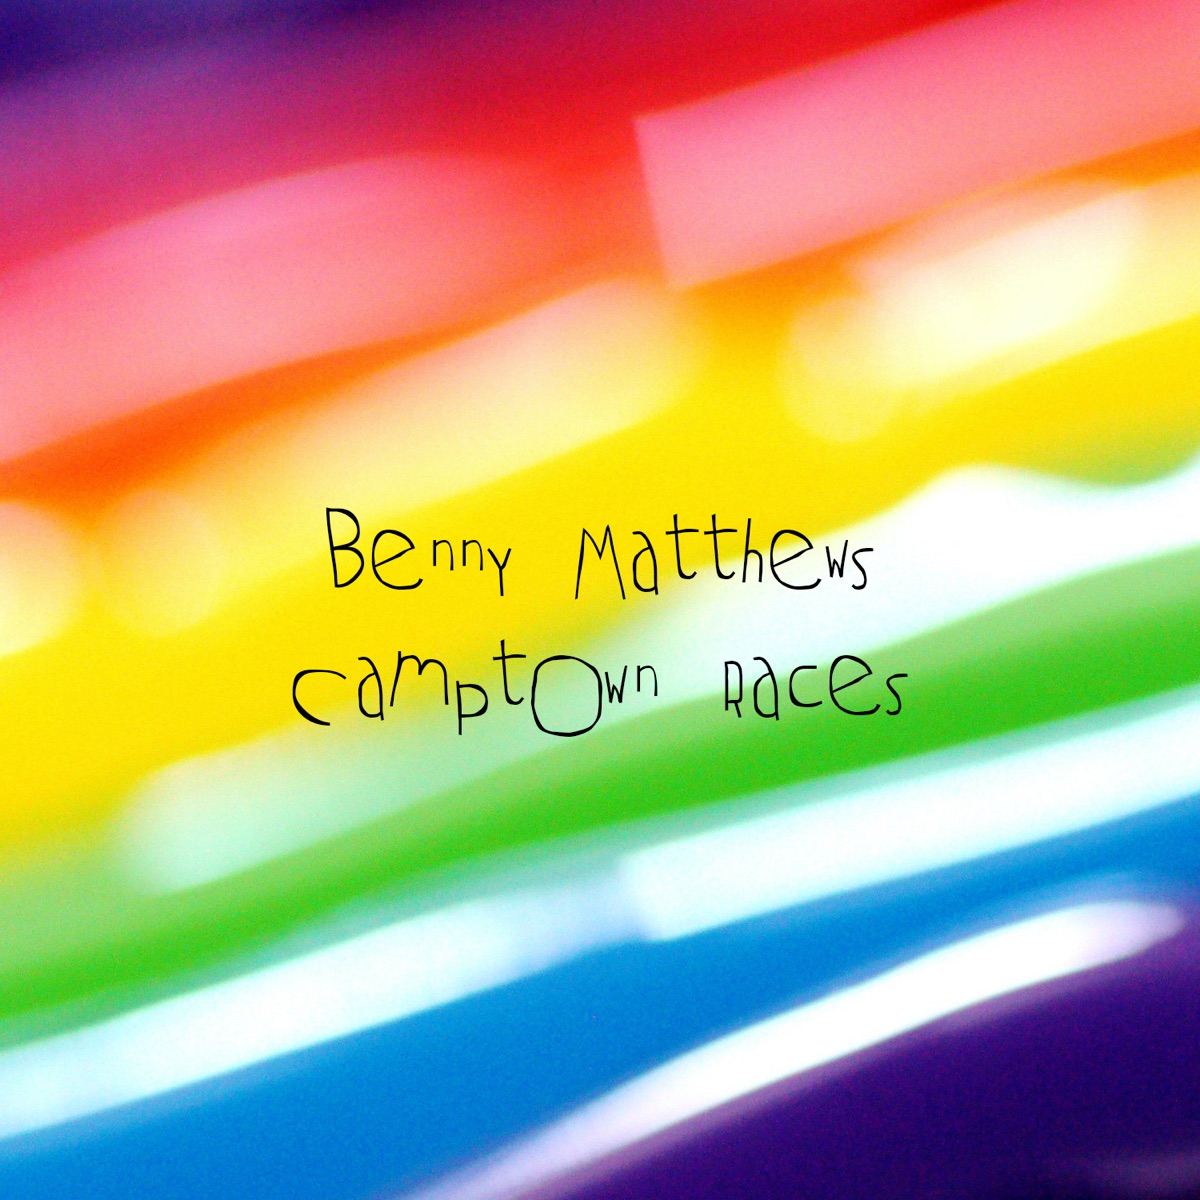 Camptown Races - Single - Album by Benny Matthews - Apple Music